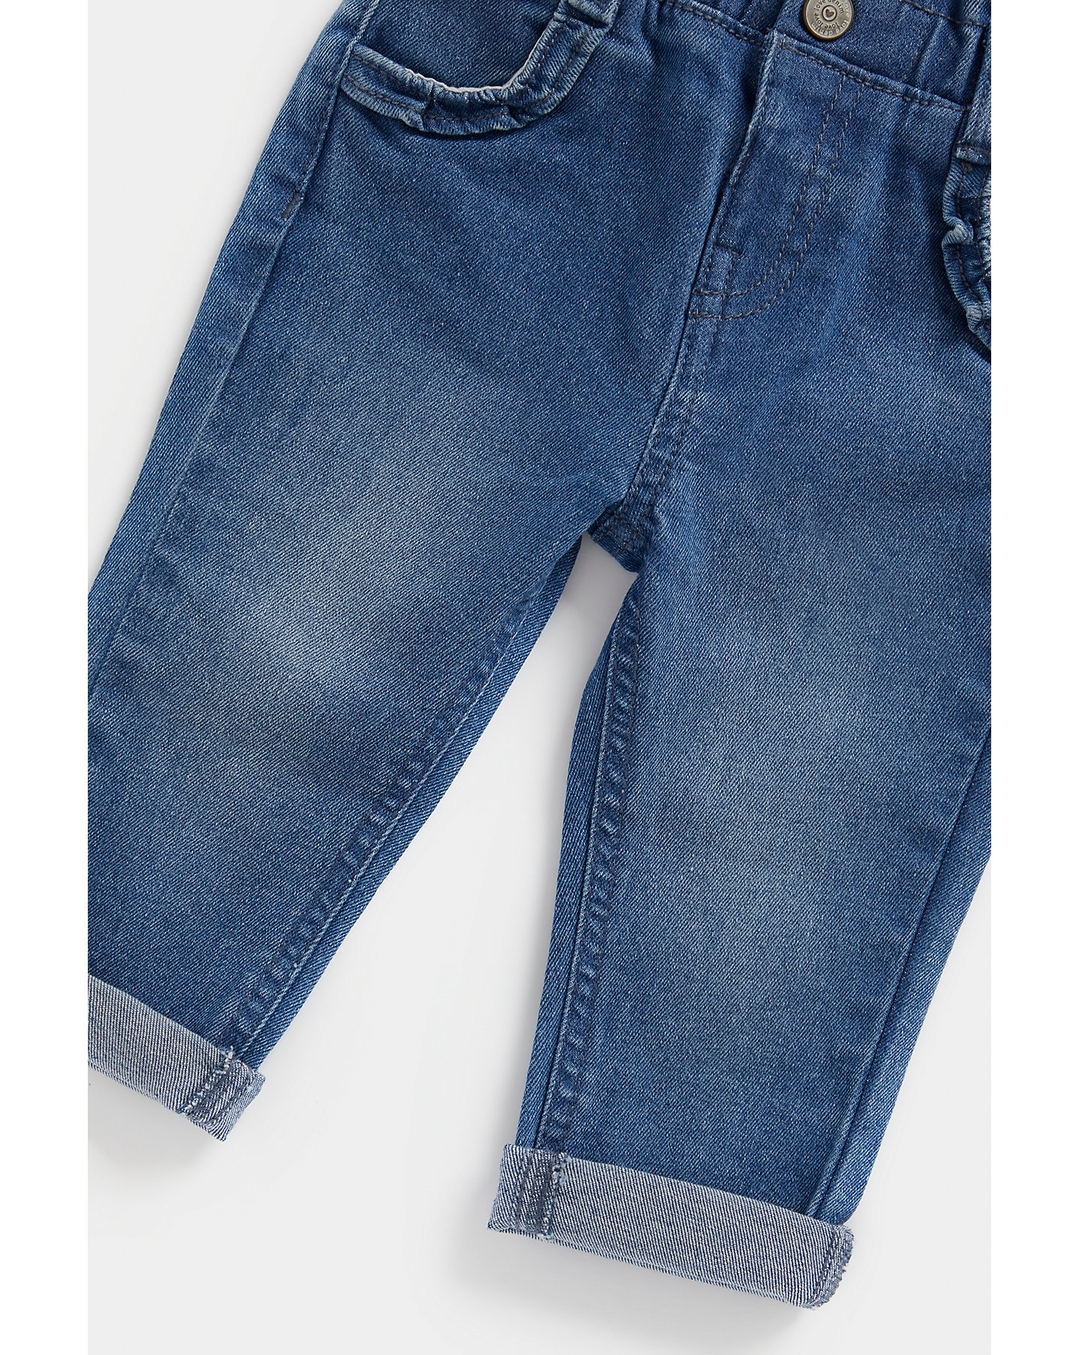 Buy Girls Jeans -Pack of 1-Denim Online at Best Price